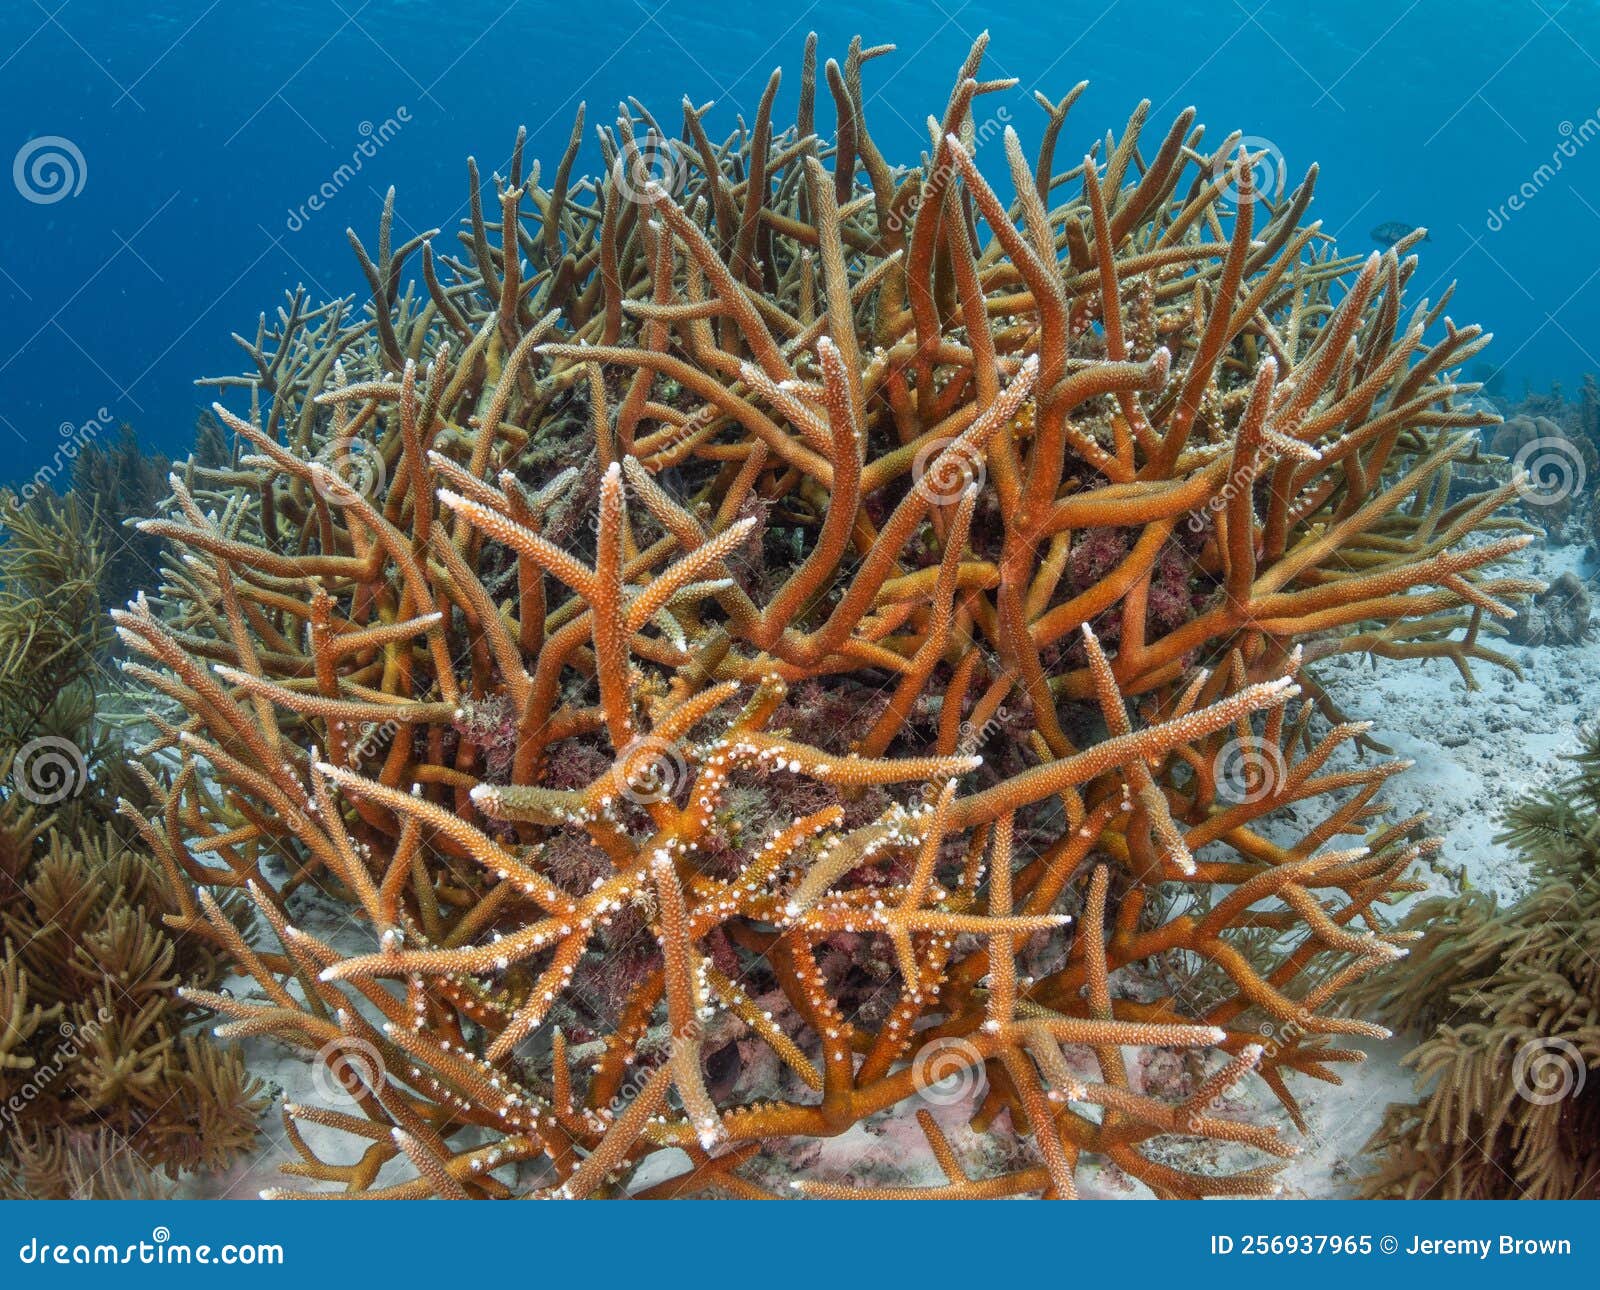 Staghorn Coral (Acropora cervicornis)